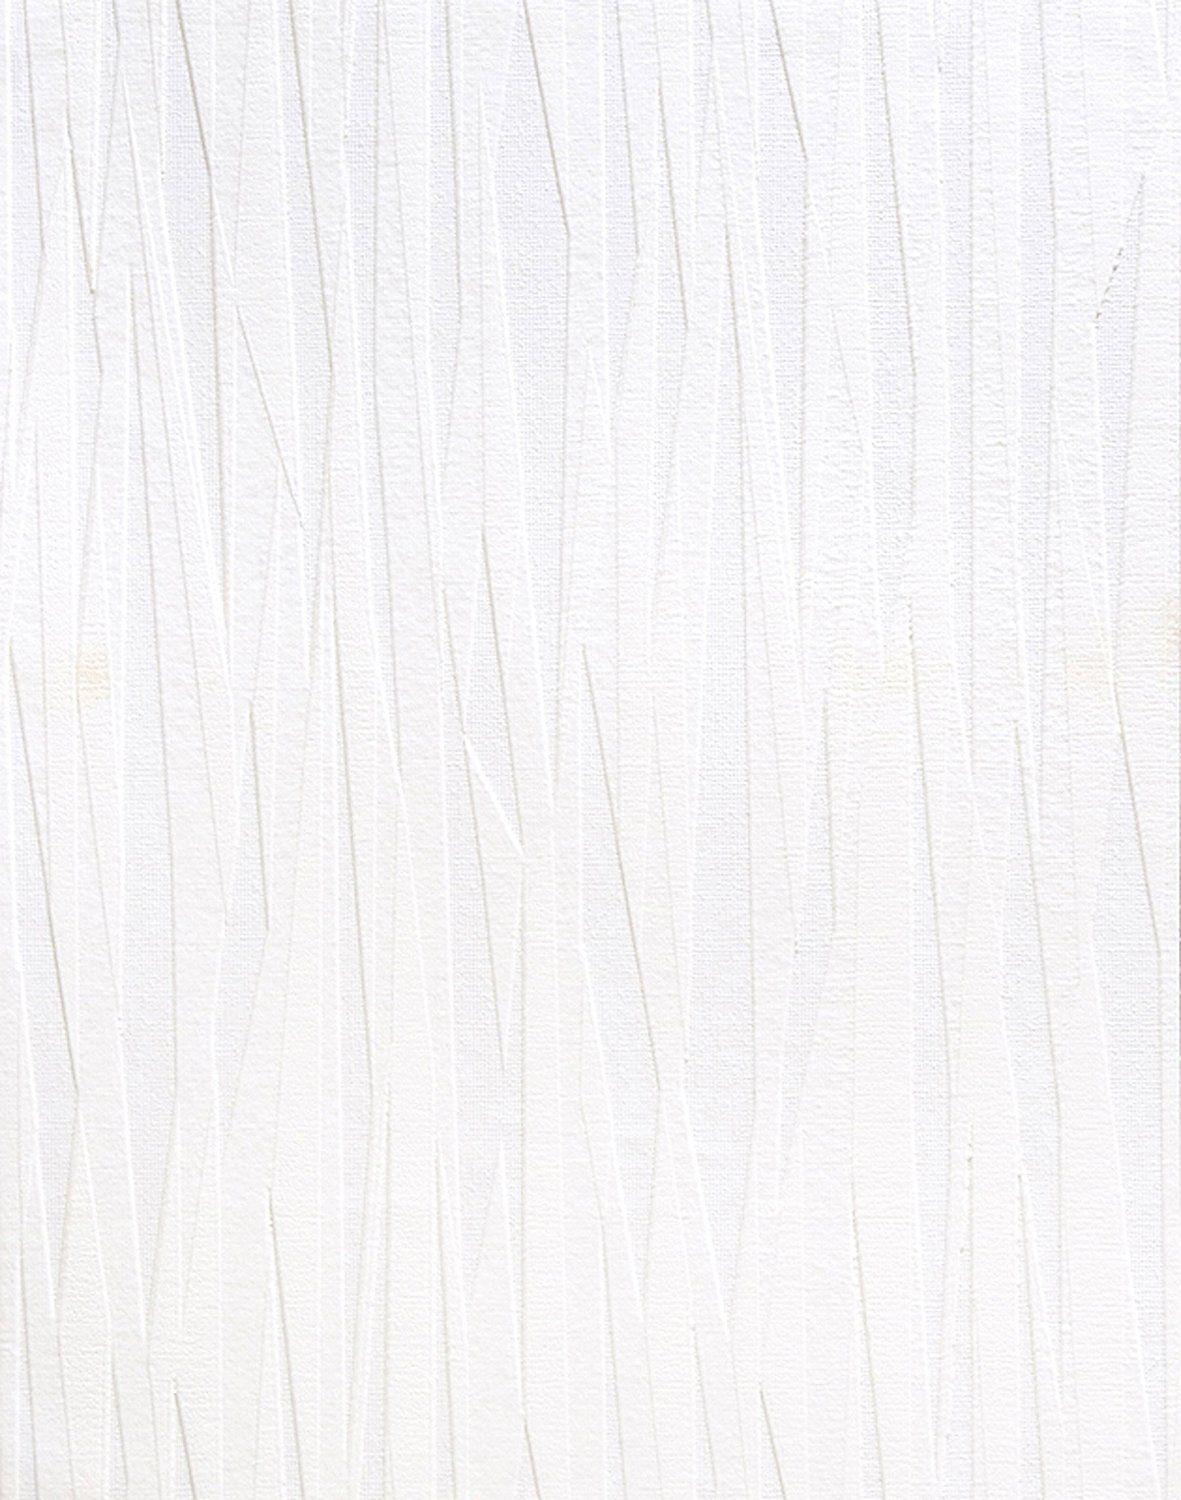 Brewster RD80028 Anaglypta Paintable Folded Paper Stripes Wallpaper